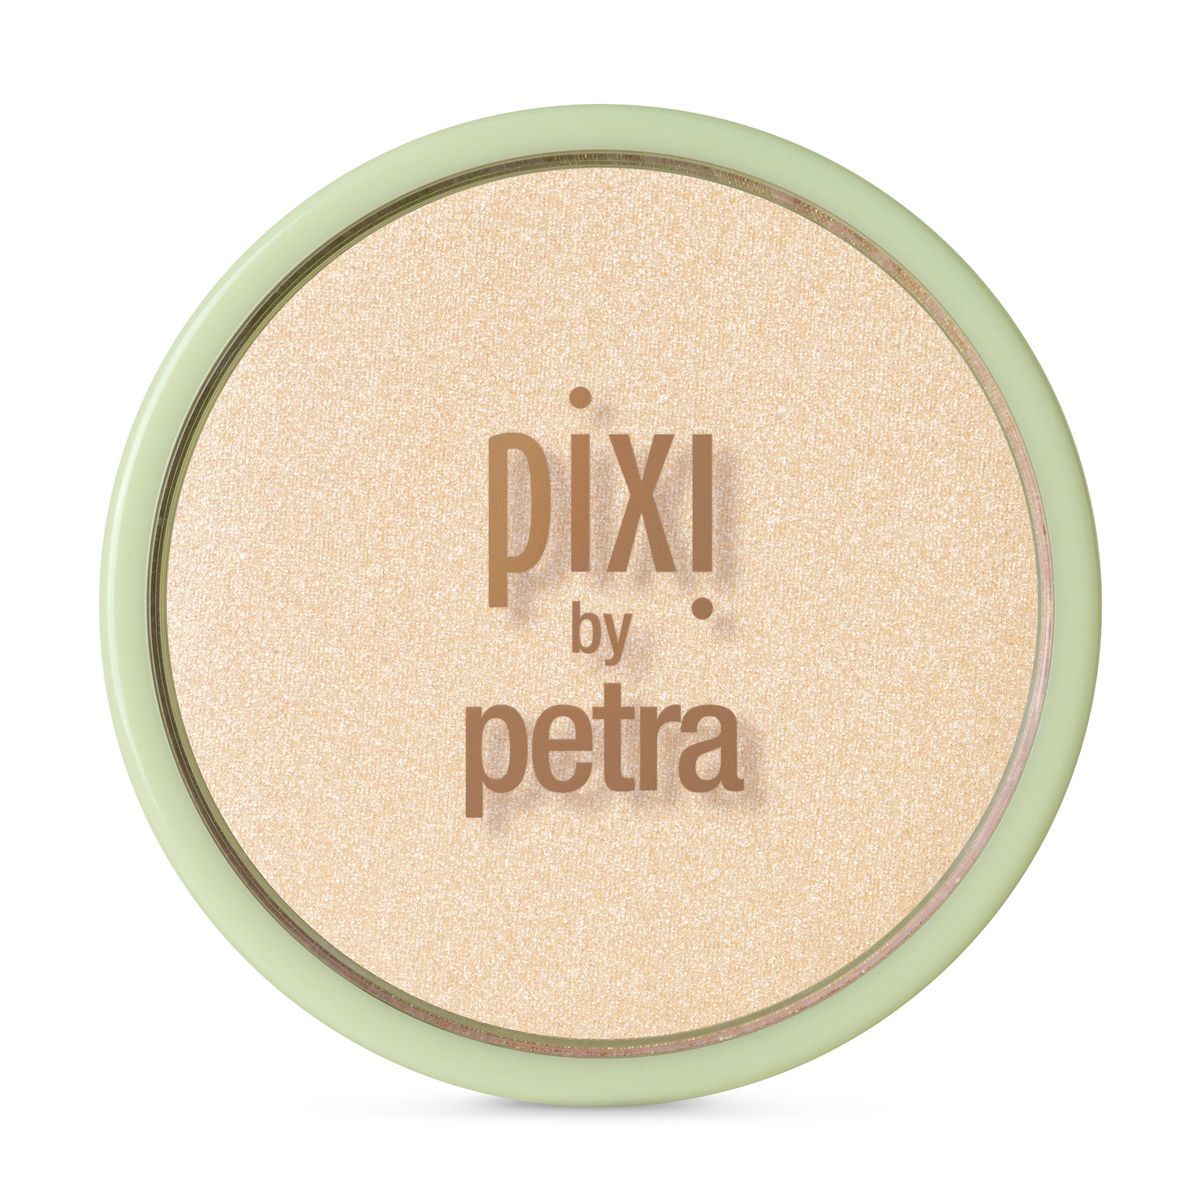 Pixi by Petra Glow-y Powder Highlighter - Cream-y Gold - 0.36oz | Target